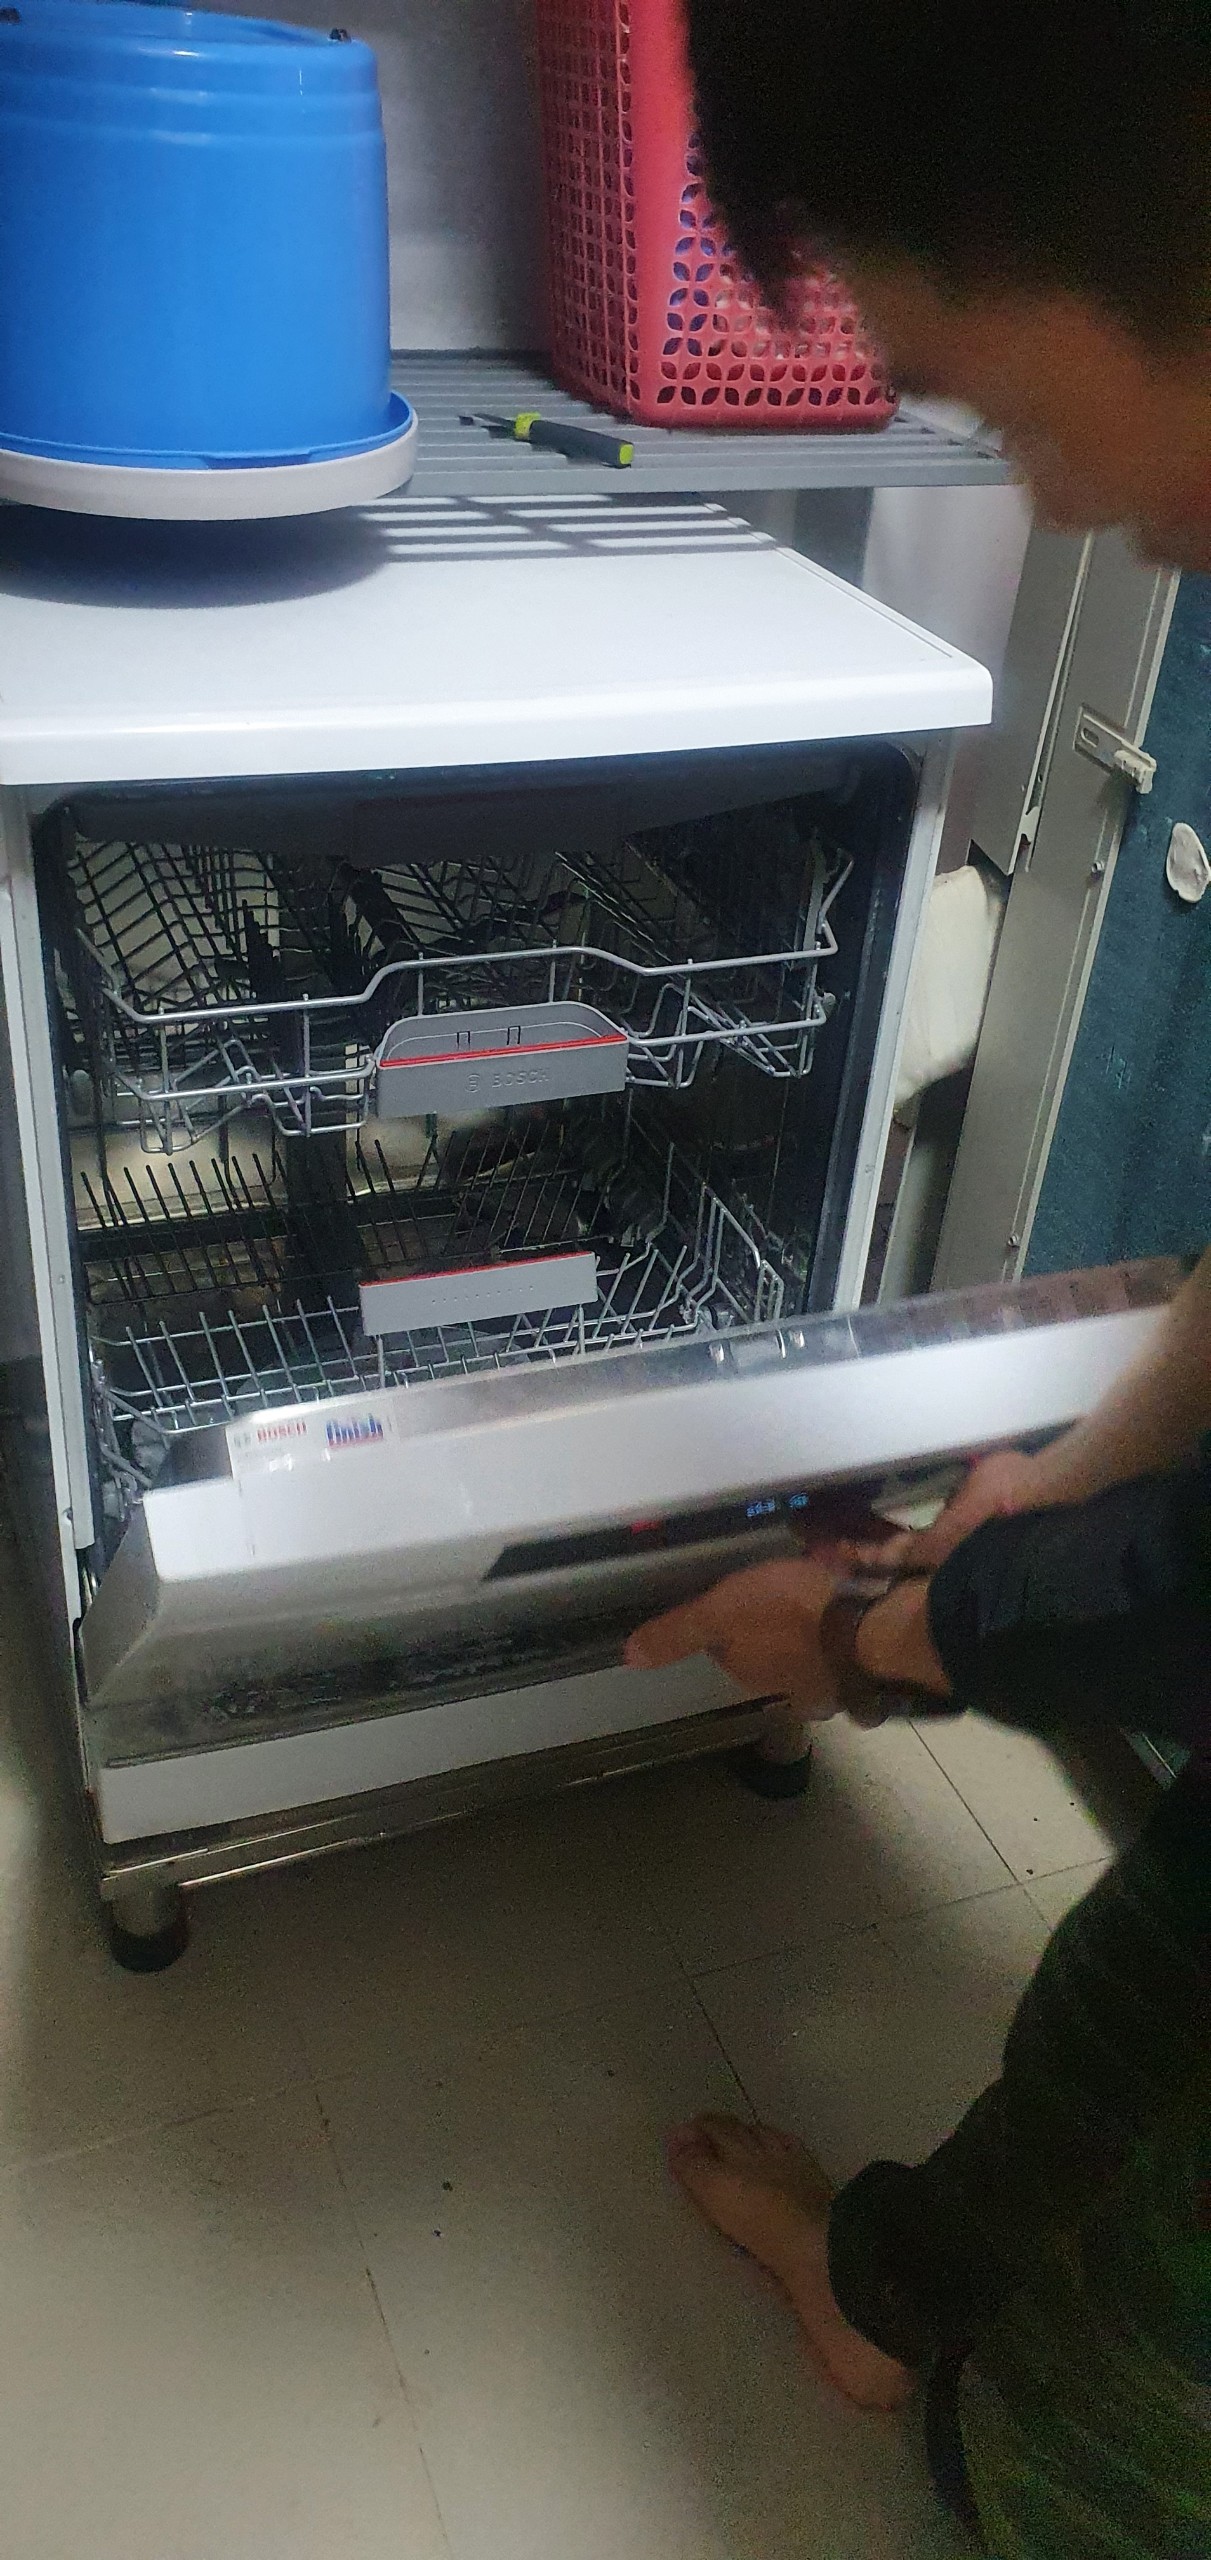 z4449111388622 a97dbc6d1afb2e224e6f185072a3305d - Sửa máy rửa bát Bosch tại Sài Gòn